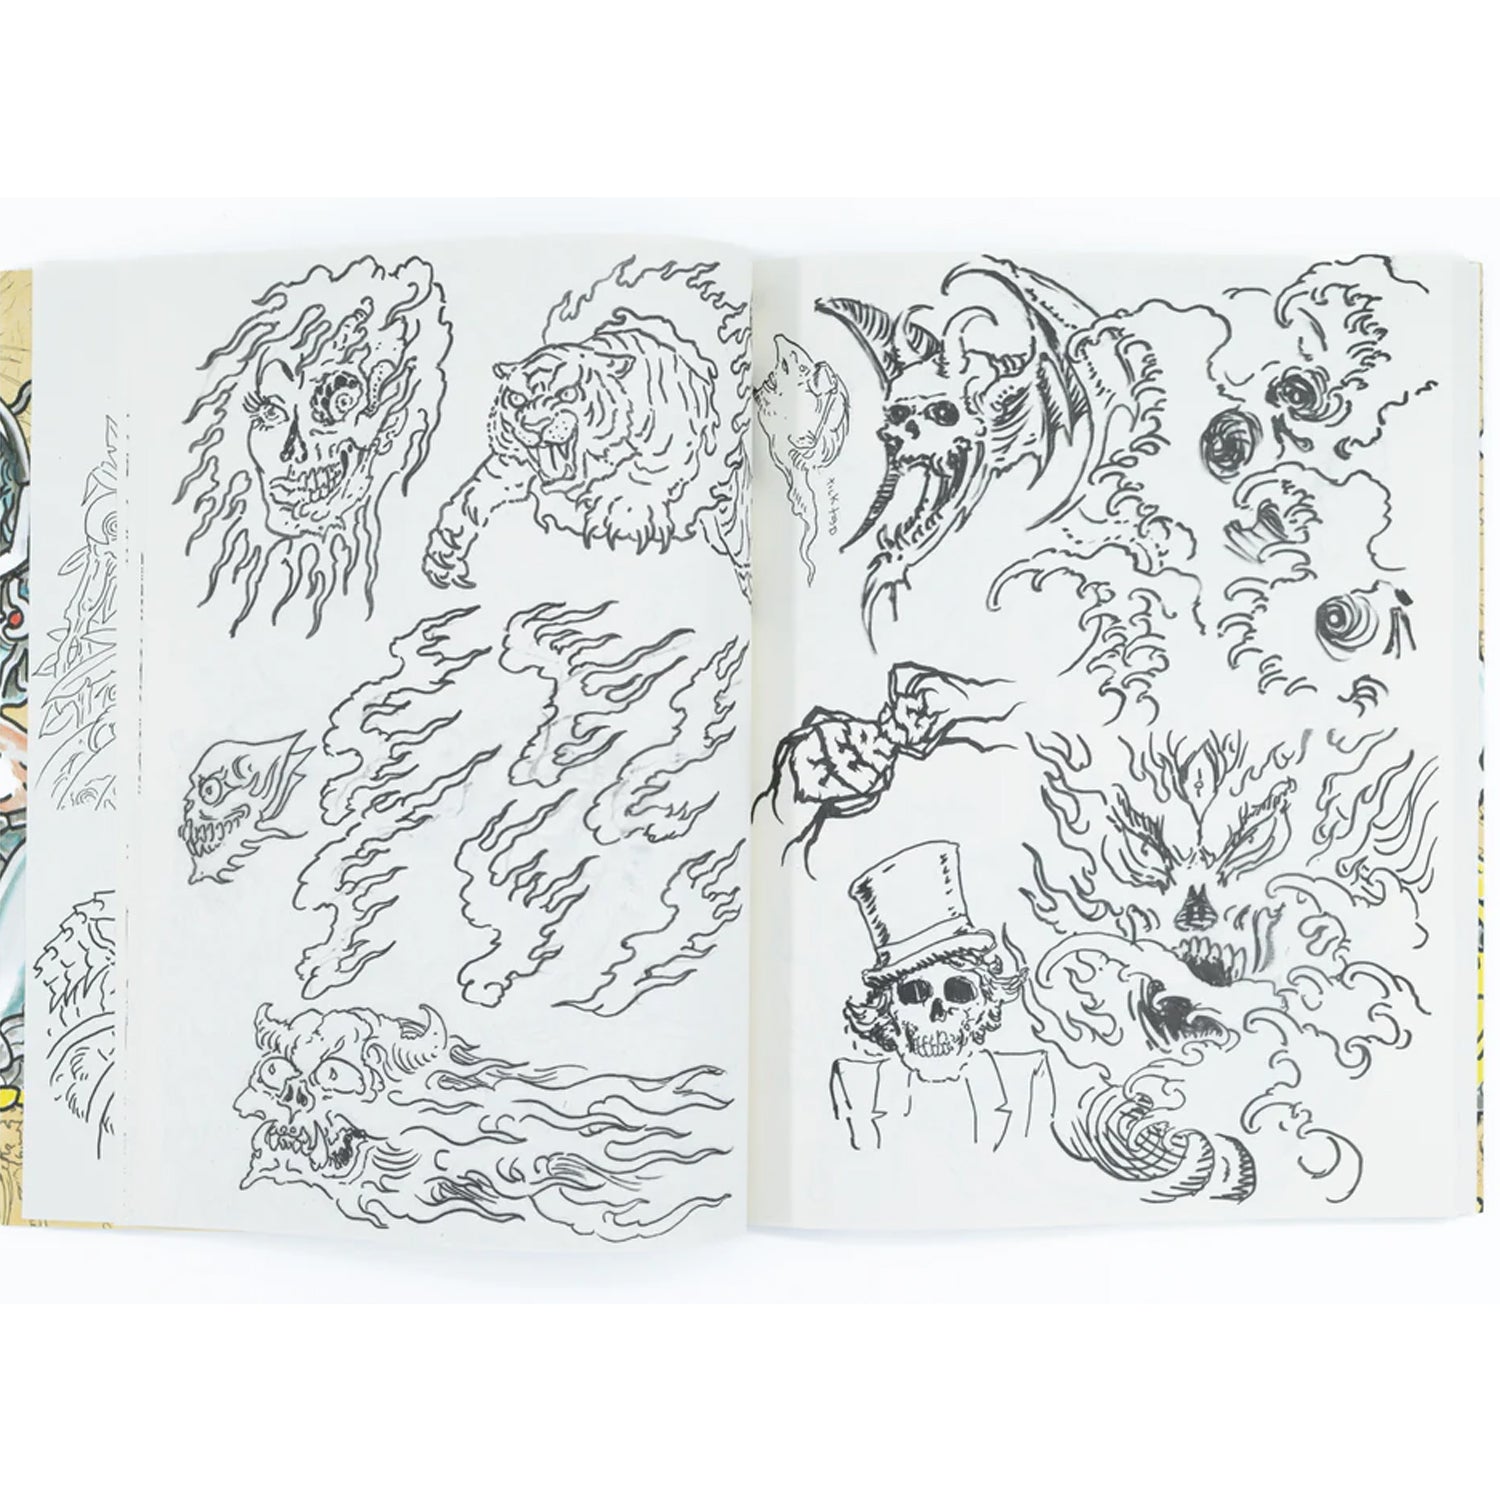 Tim Lehi's "Study" Sketch/Line Book